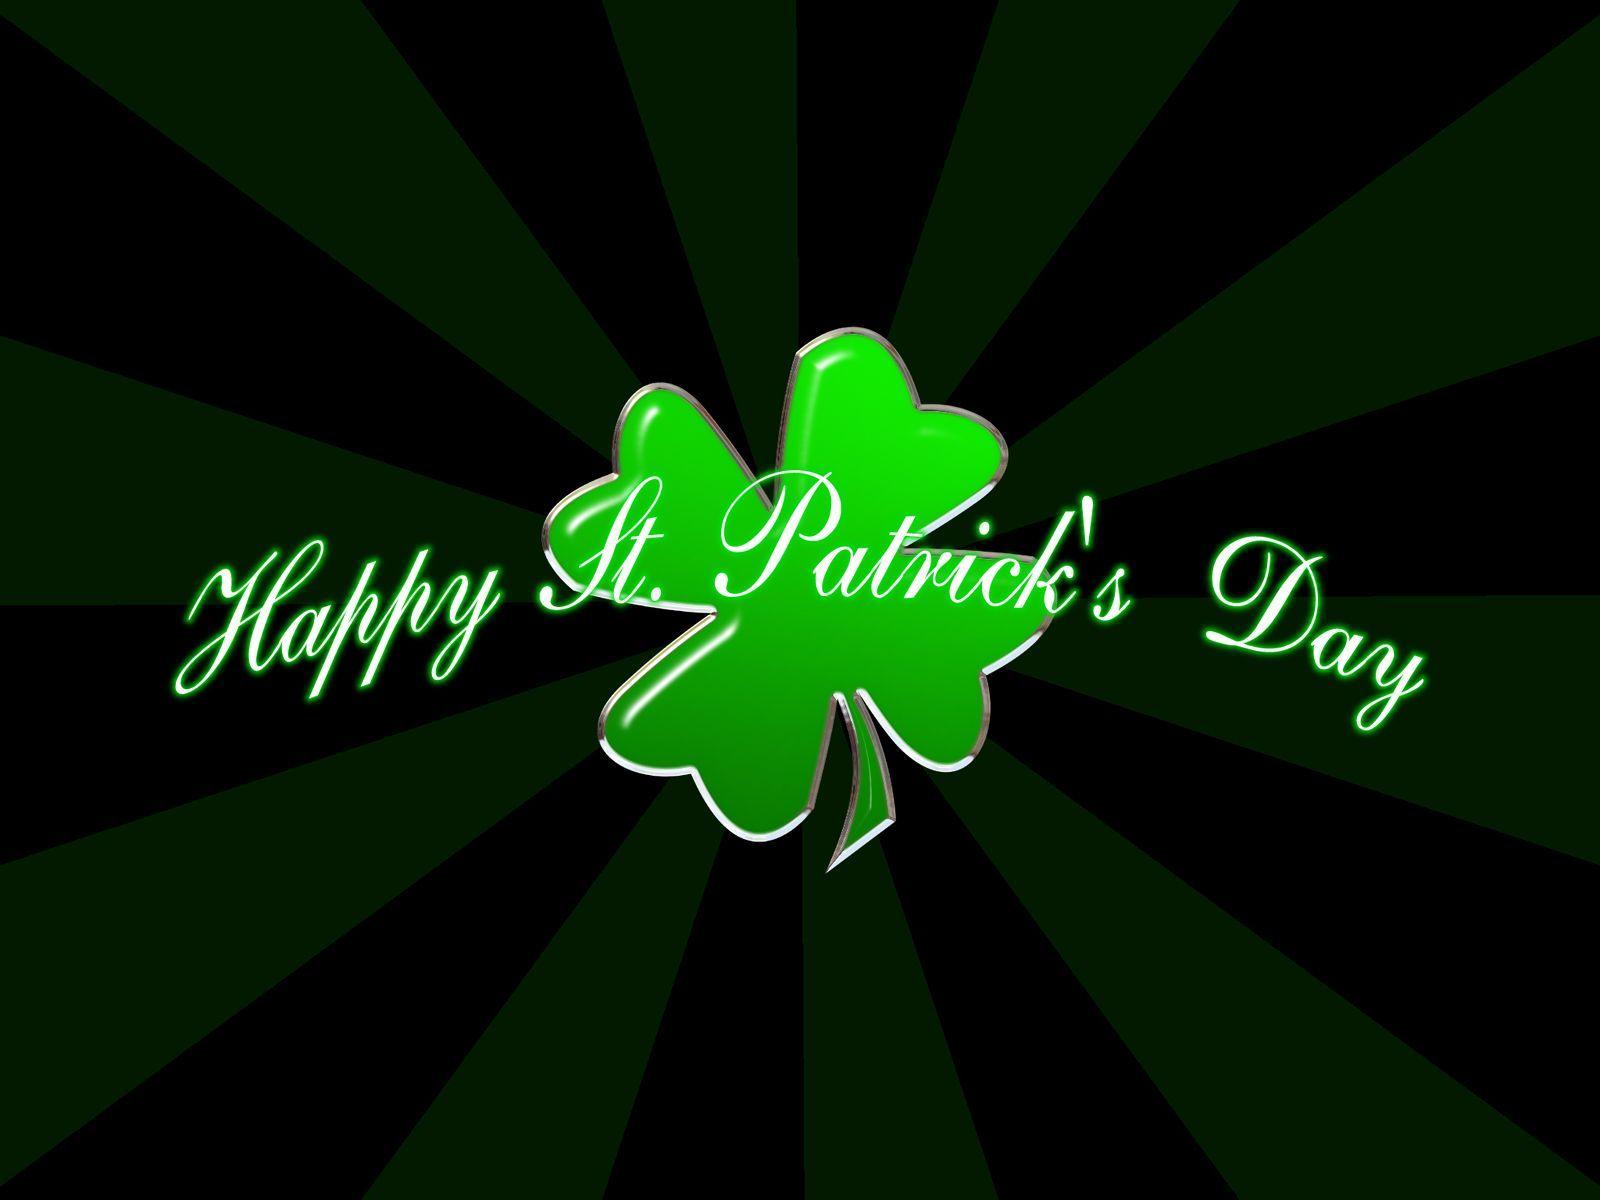 St. Patrick's Day Background. Happy St. Patrick's Day 2014